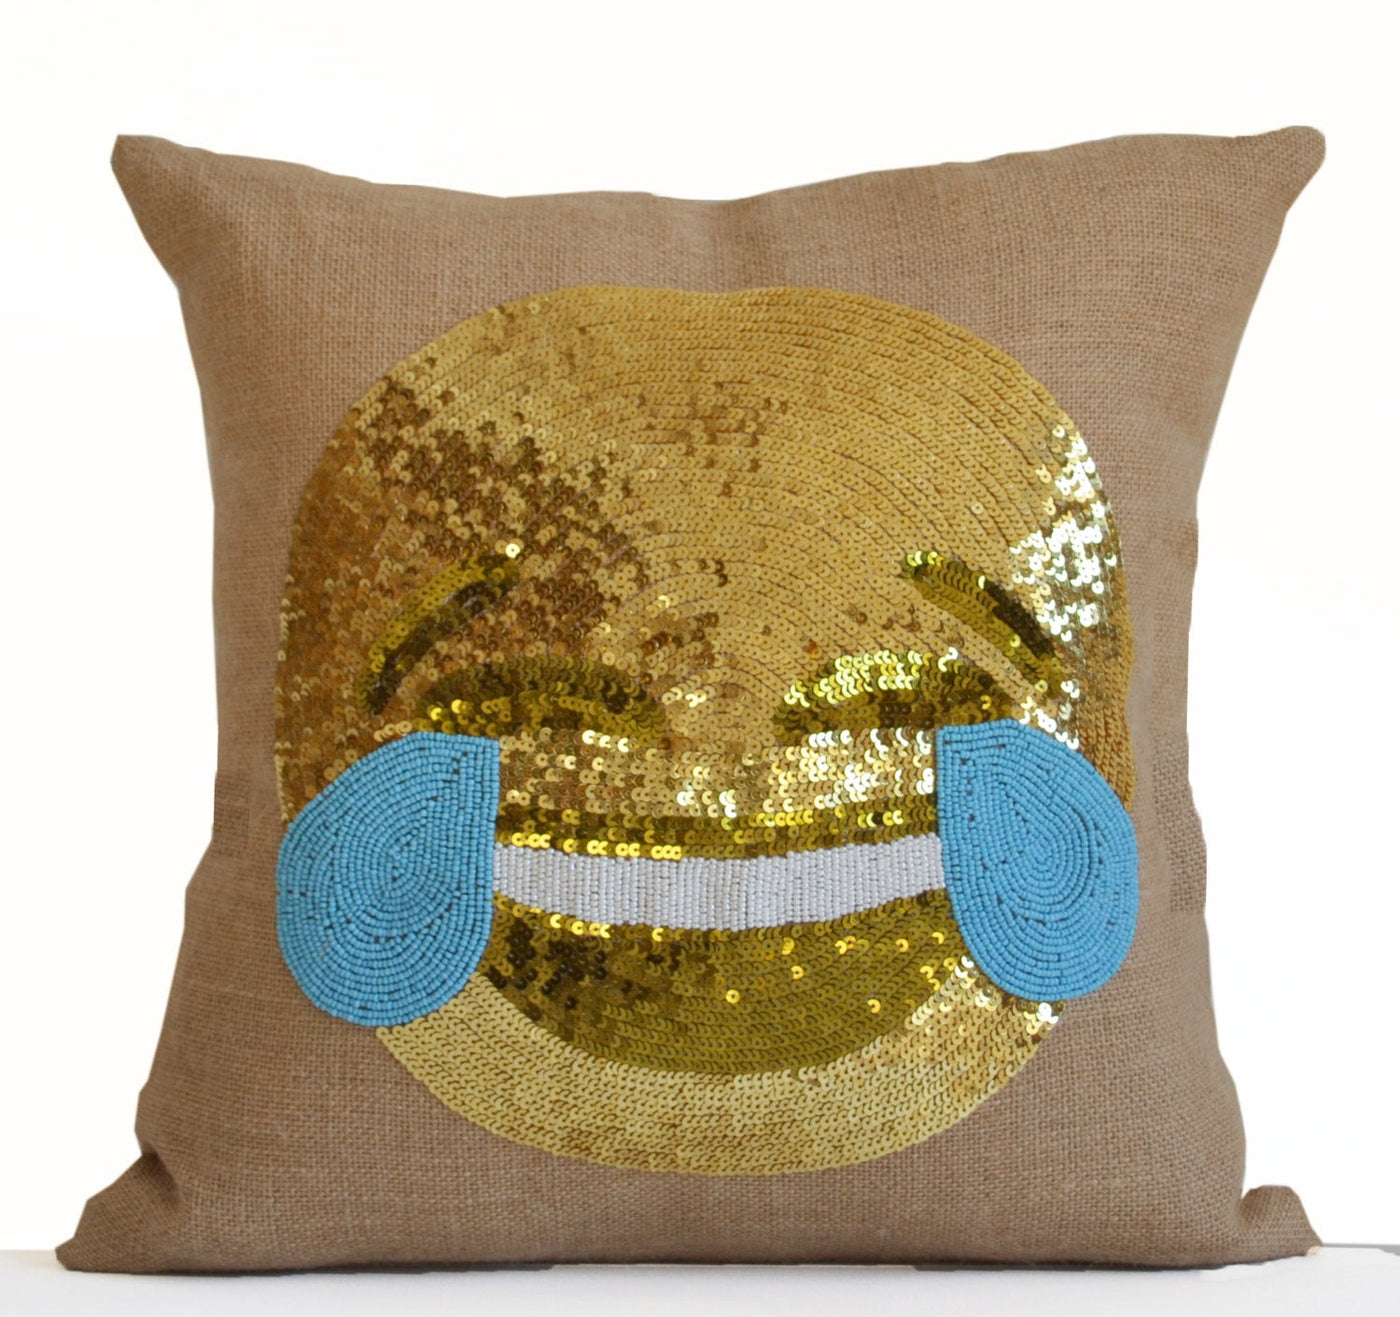 Smiley Face Pillows, Joy Pillows, Happy Face Throw Pillow Covers, Burlap Gold Pillows by Amore Beauté